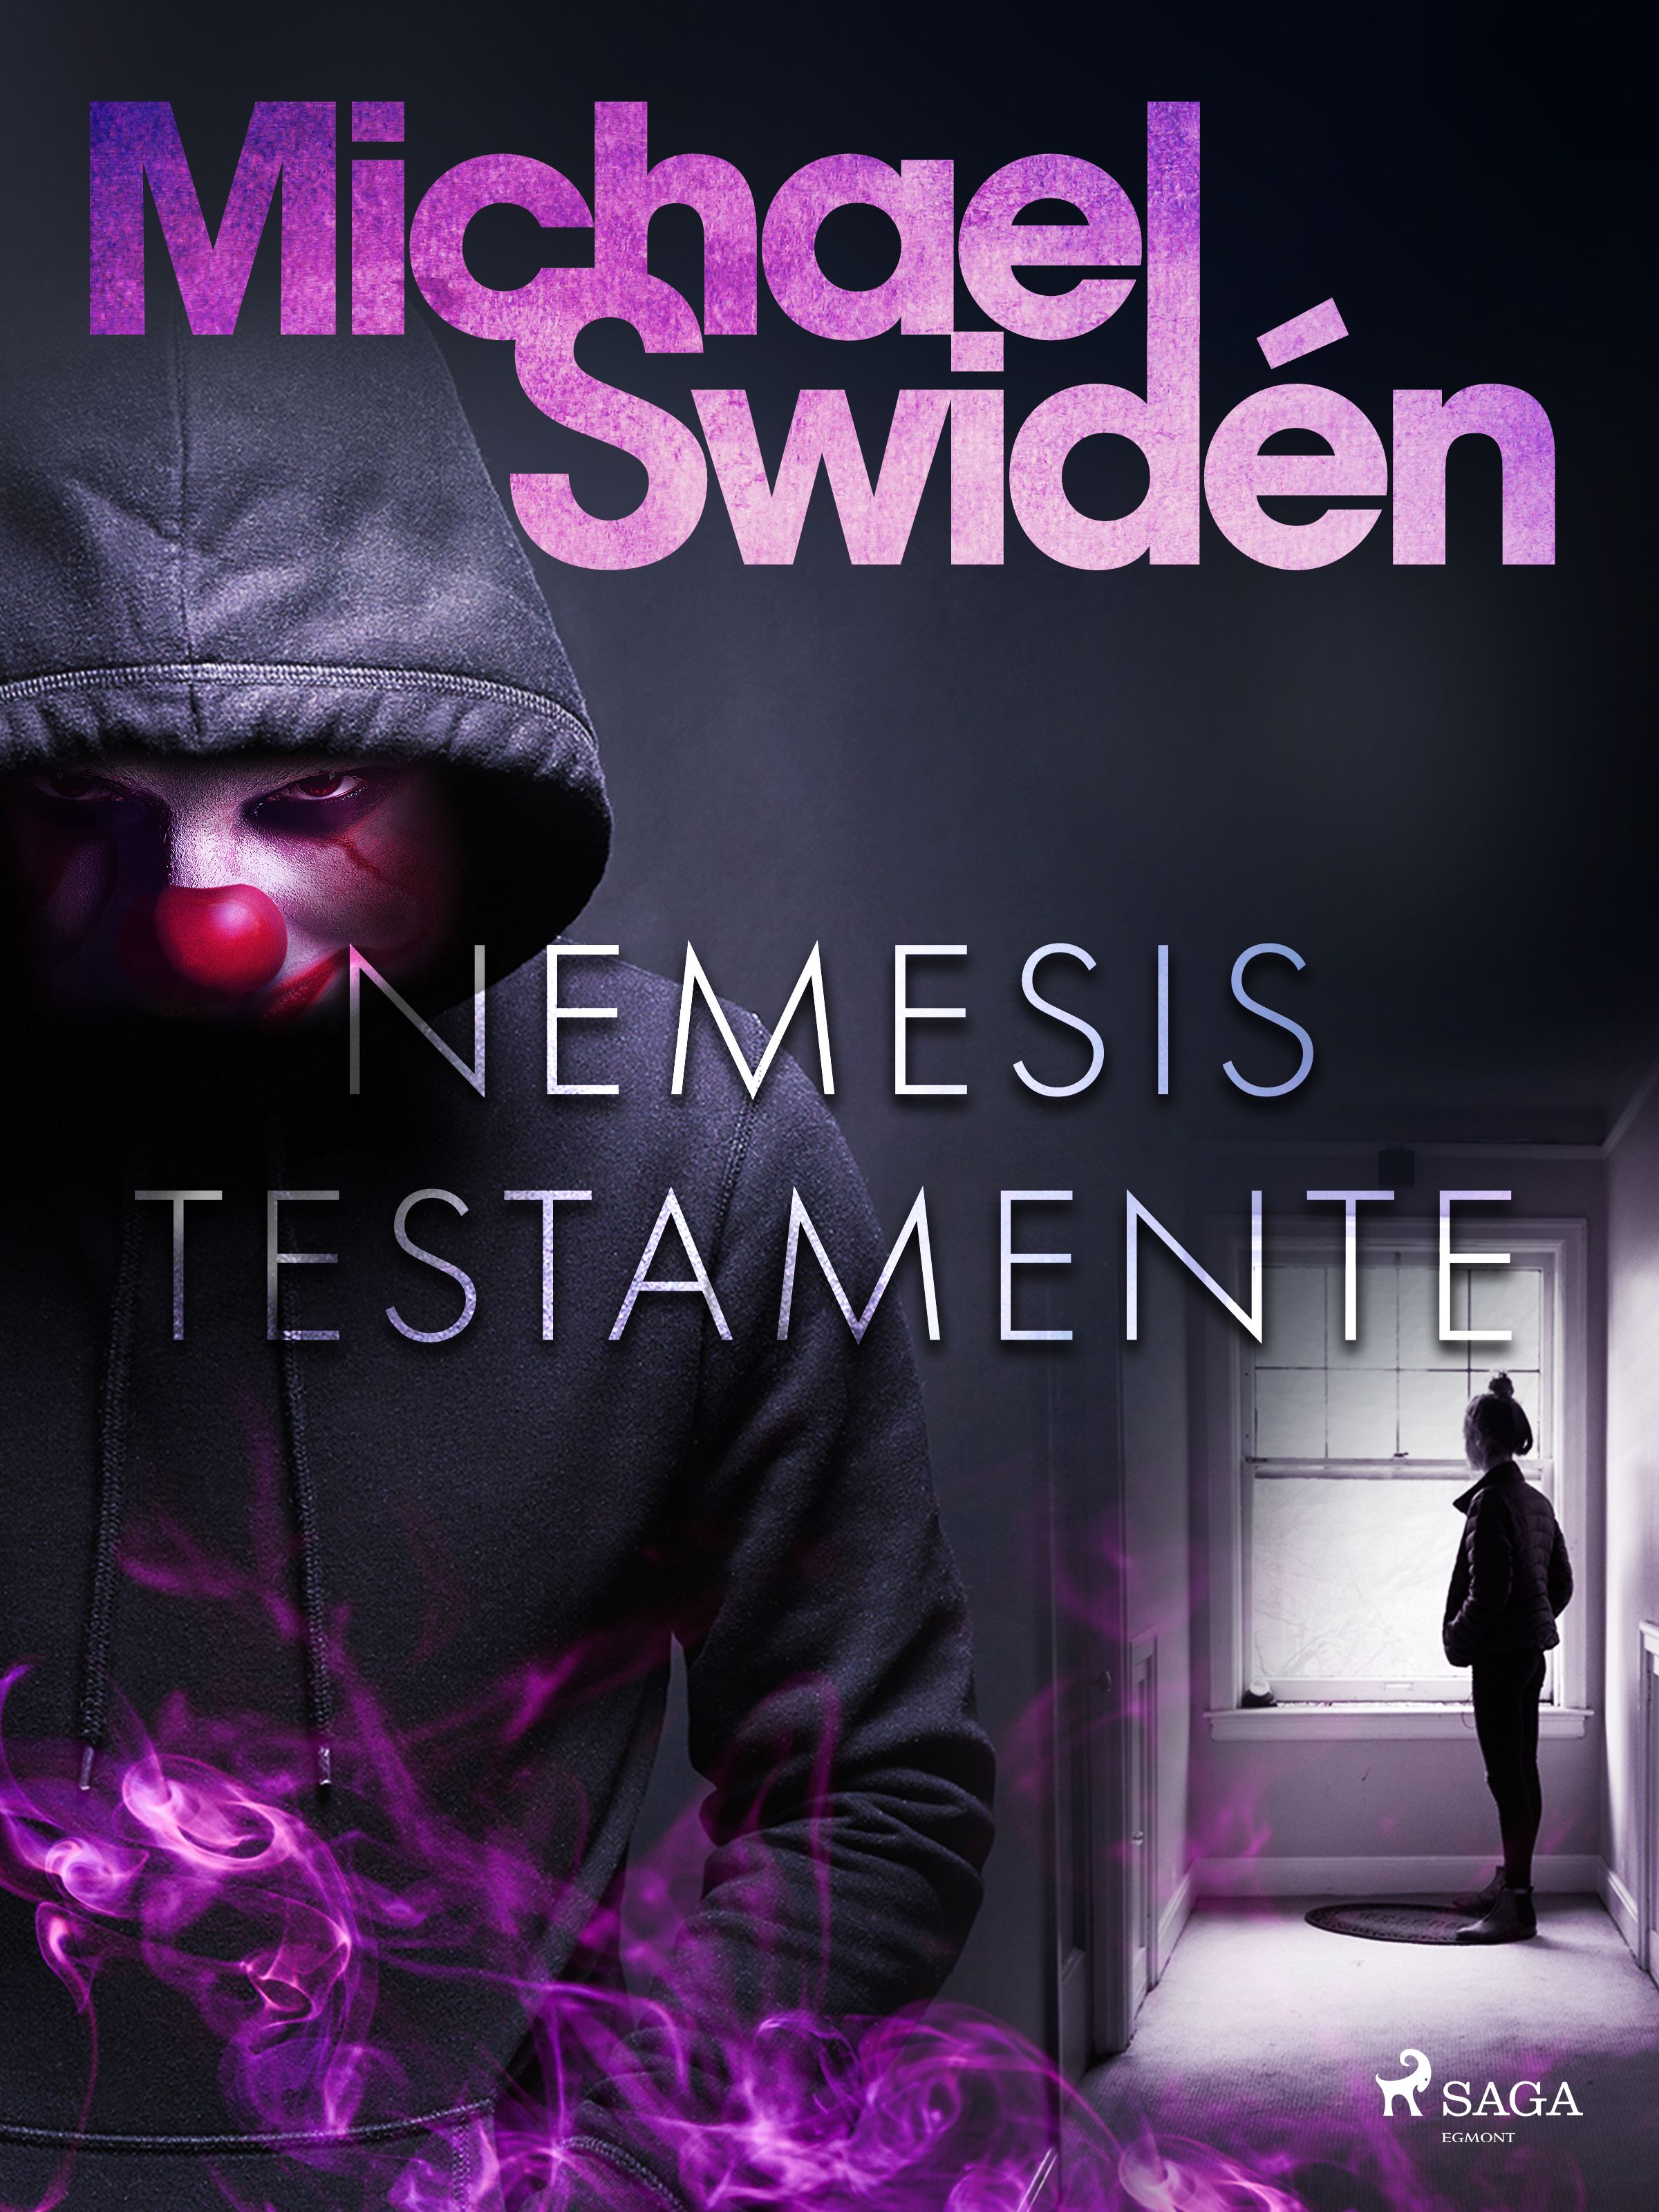 Nemesis testamente, e-bog af Michael Swidén